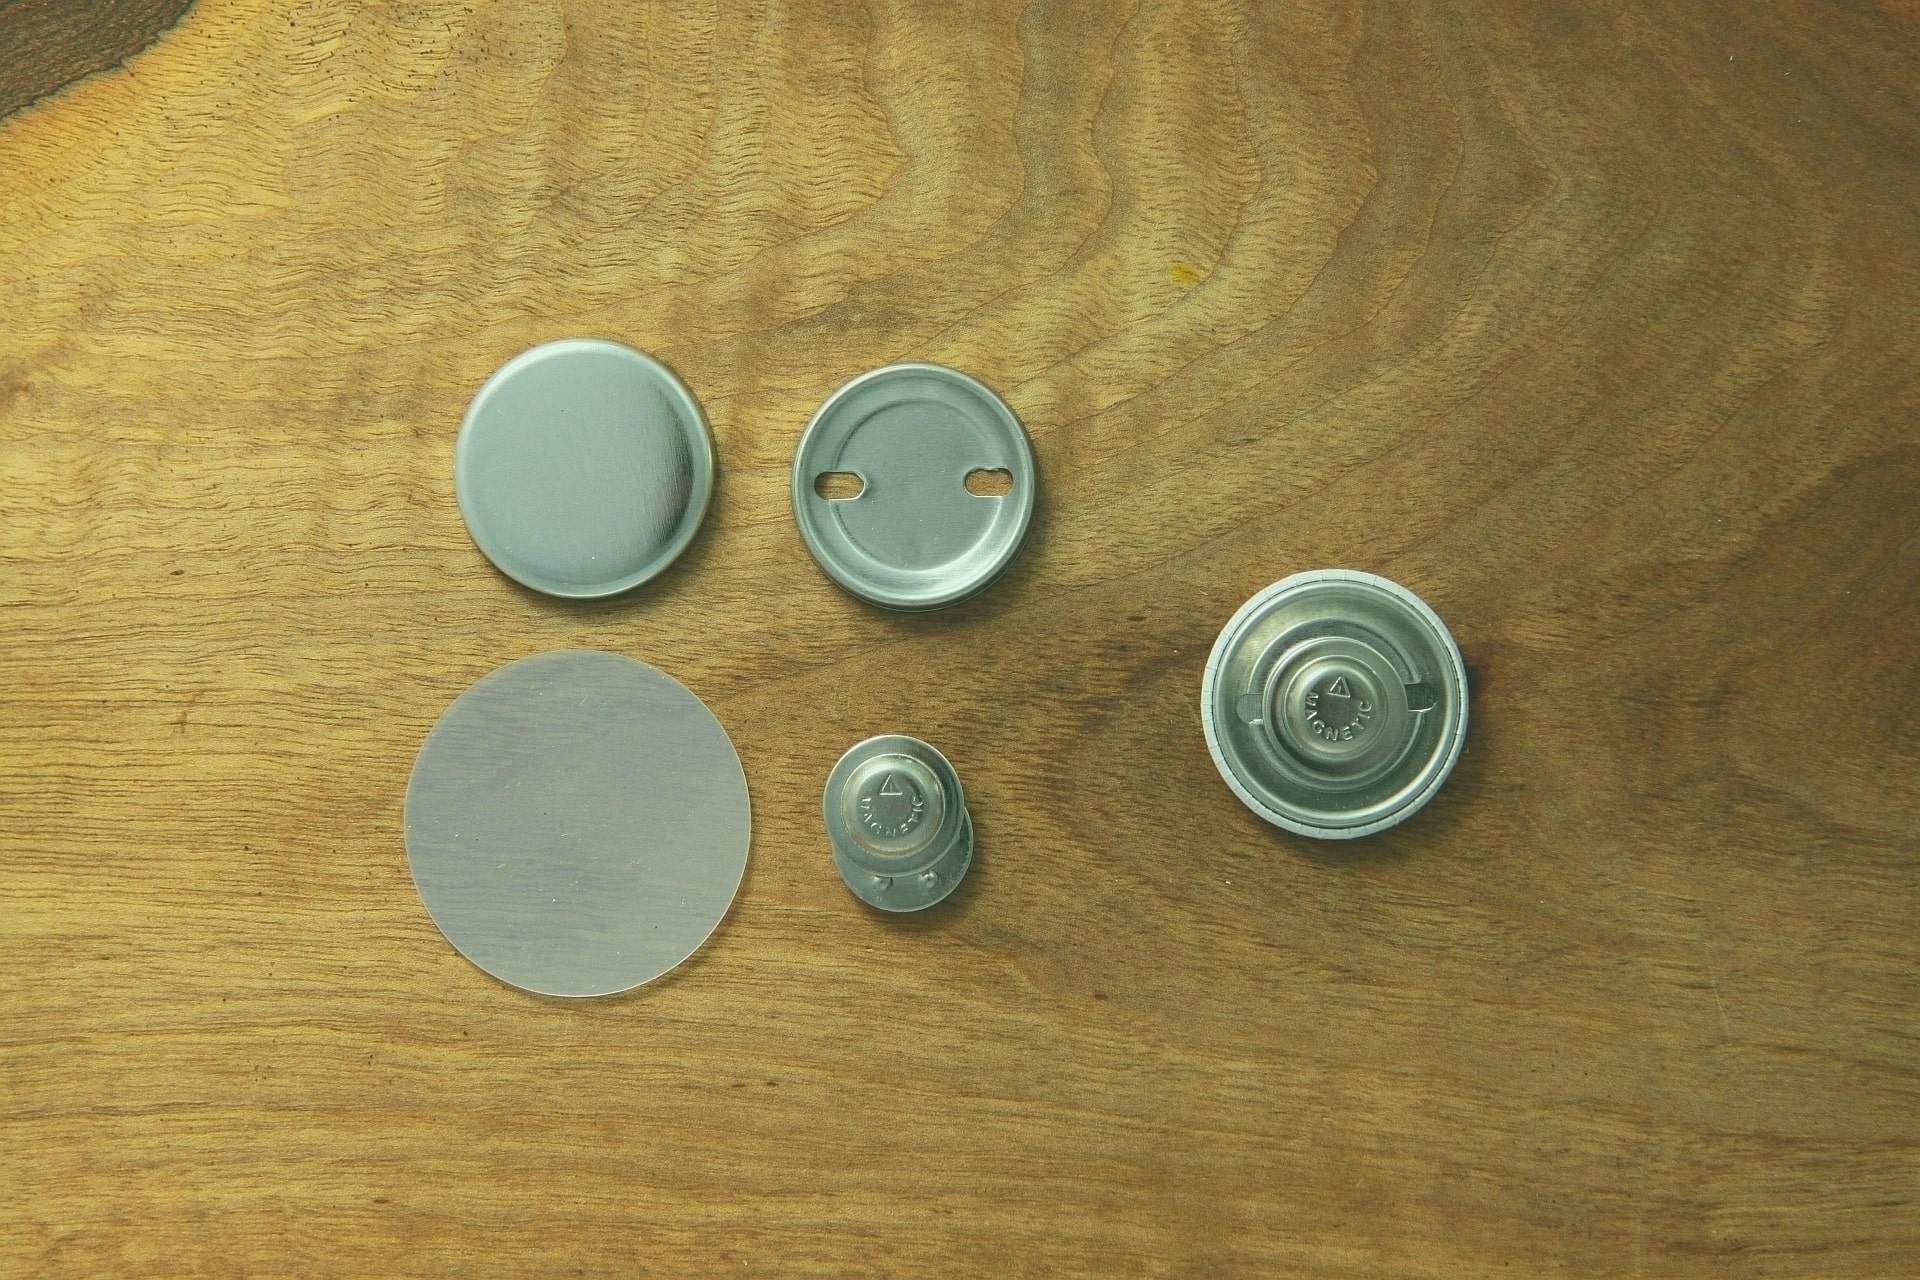 komponenty do przypinek z magnesem do ubrania 32 mm